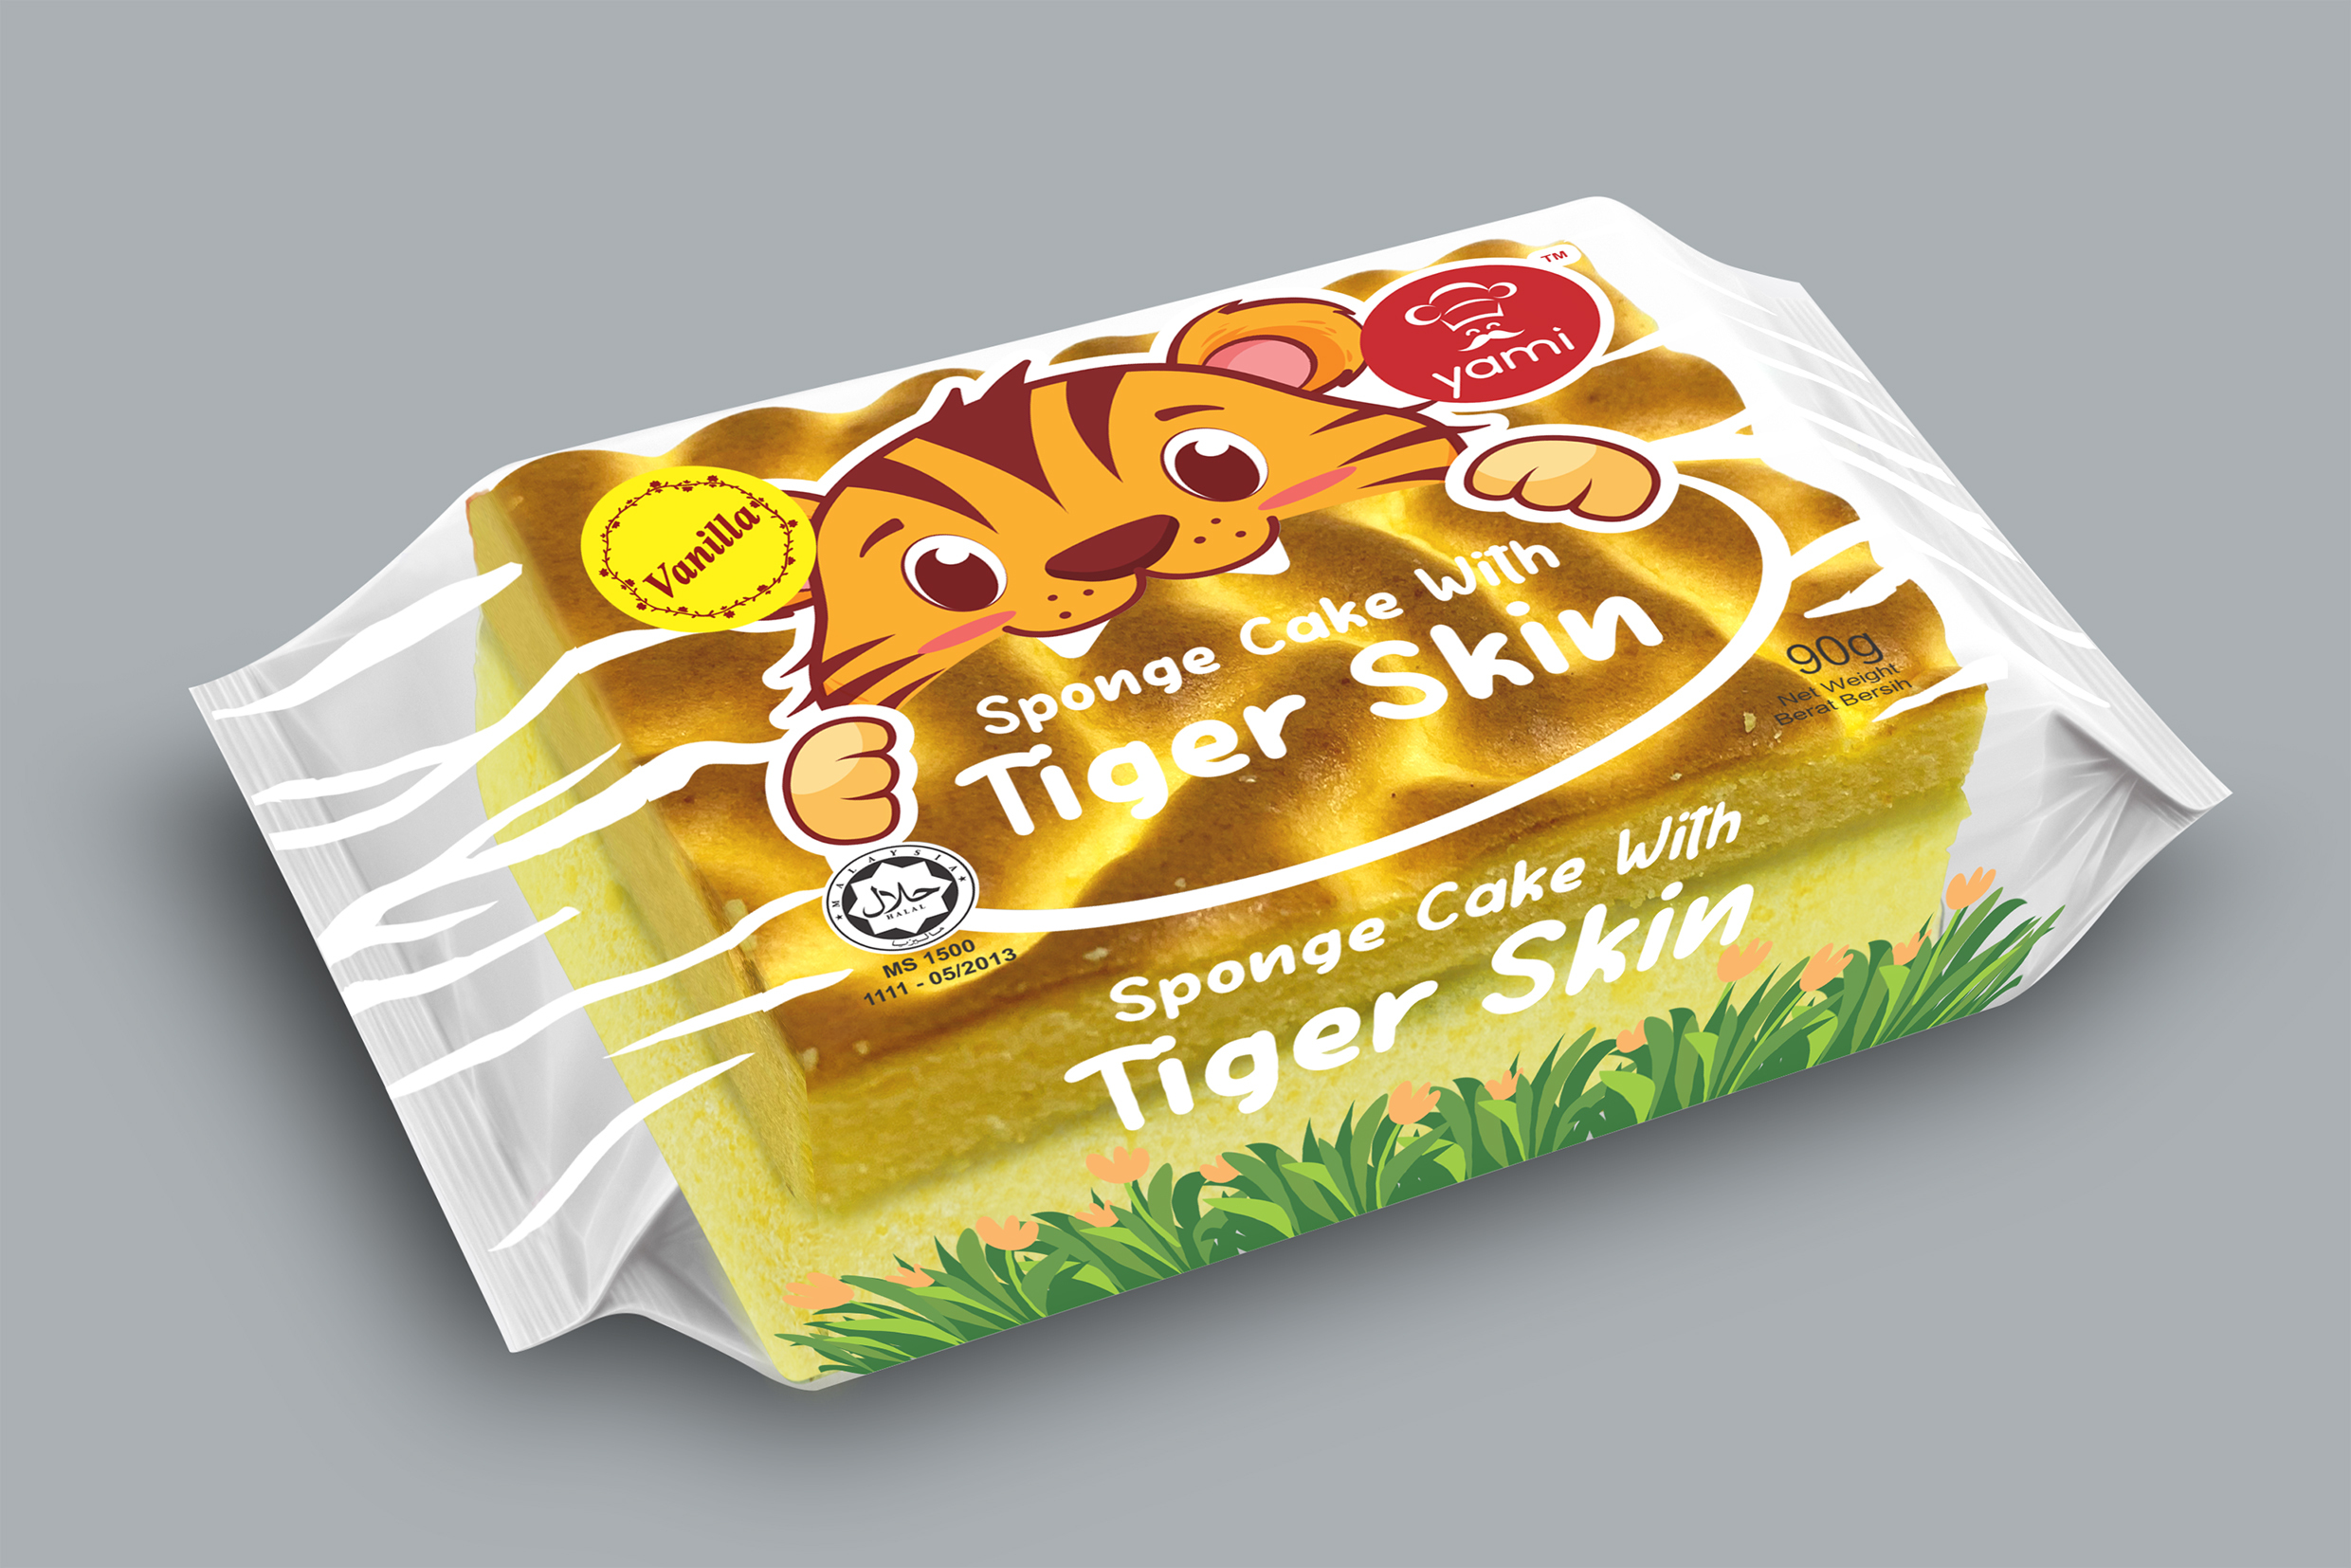 Tiger sponge cake vanilla